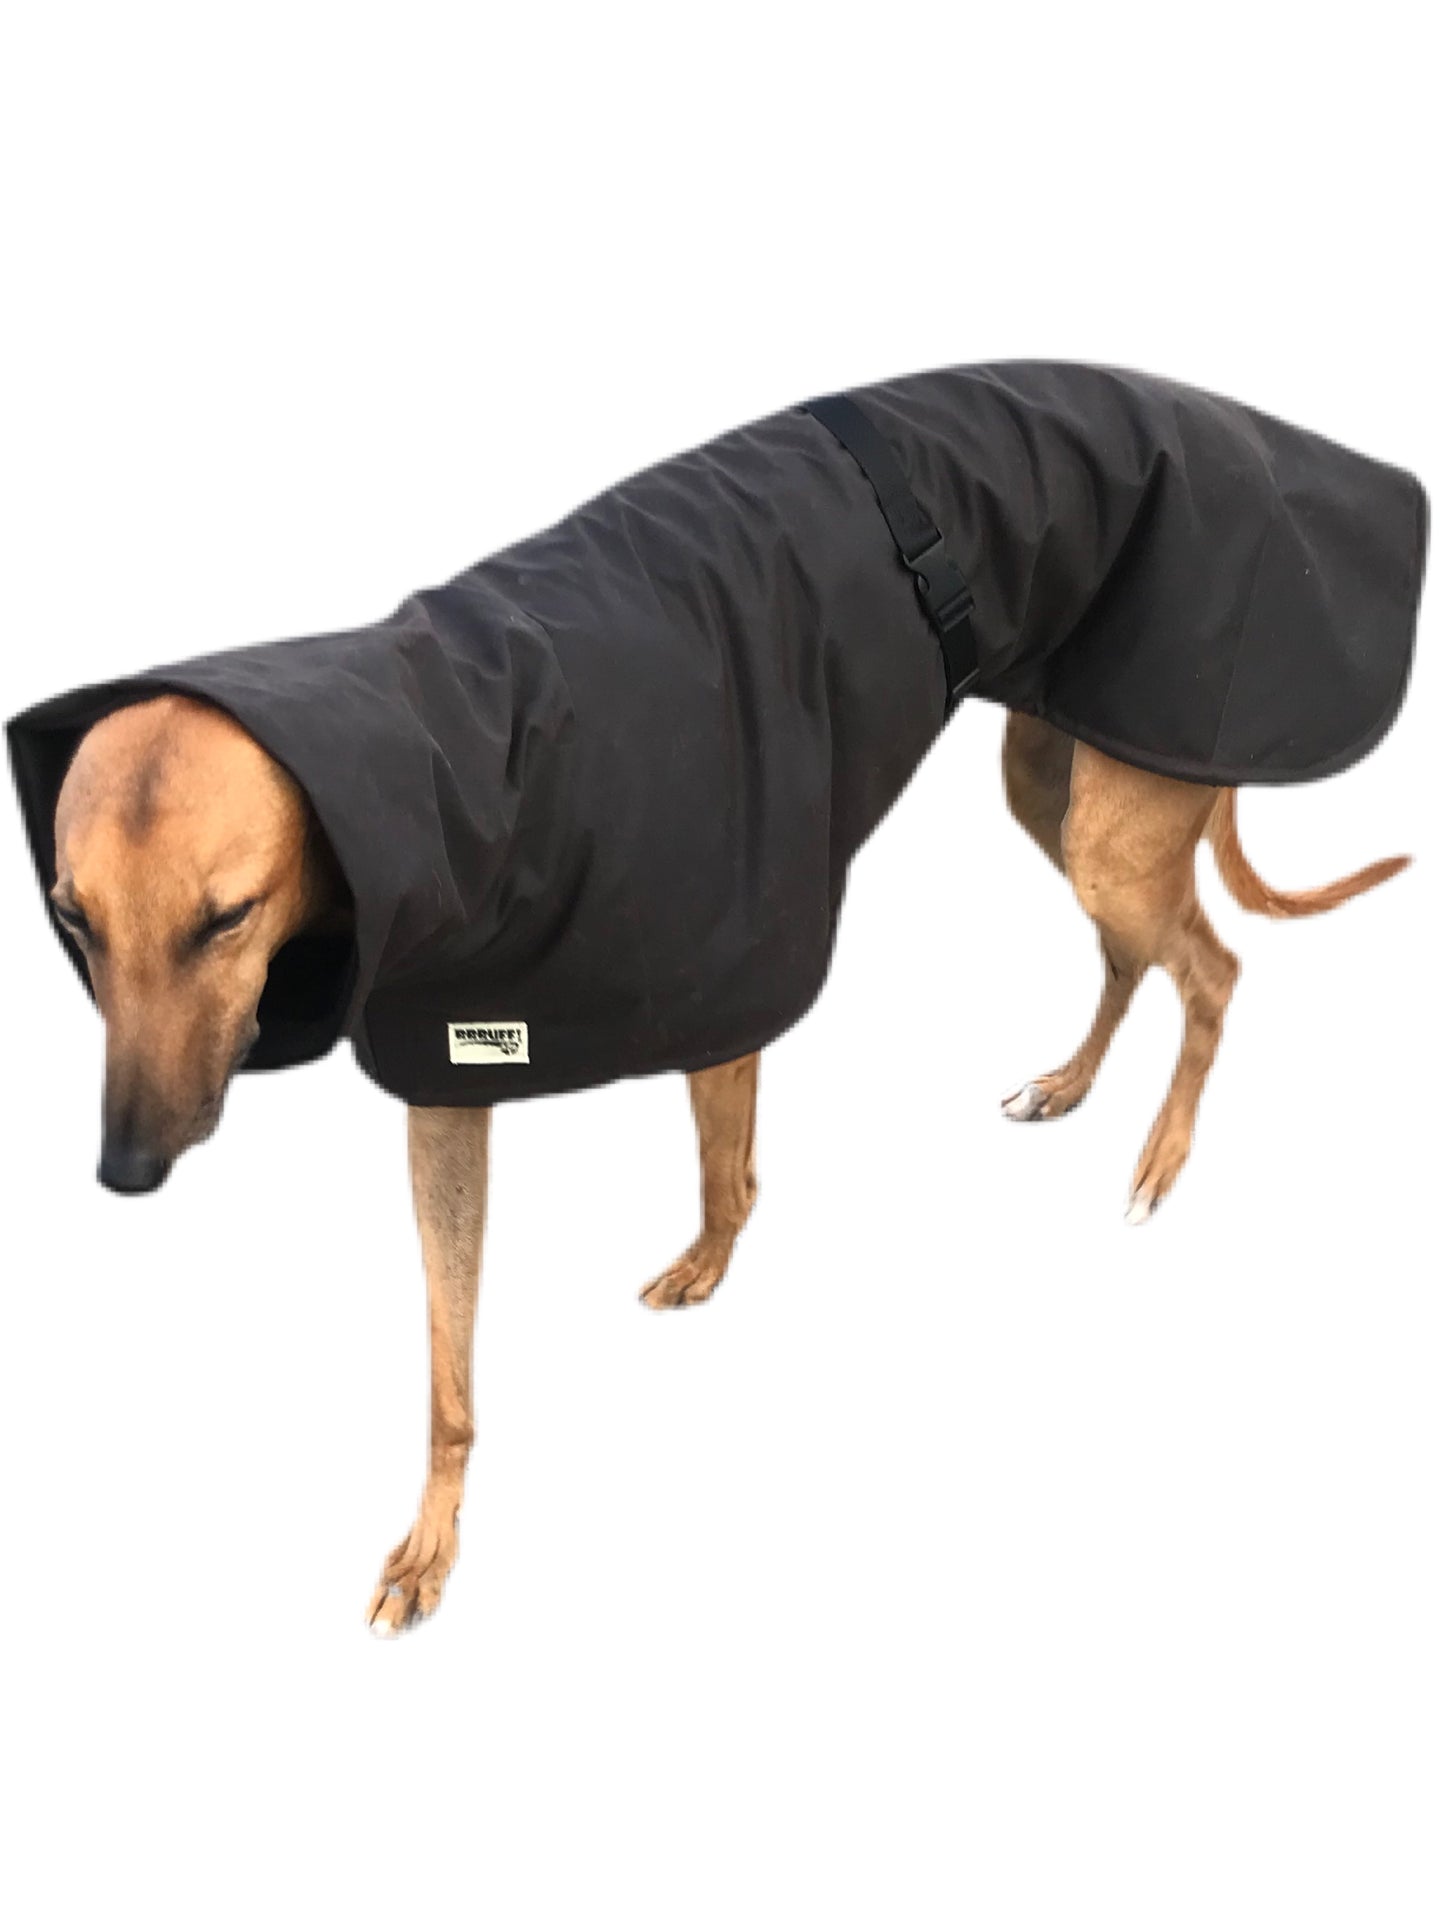 Oilskin ‘Greyzabone, Greyhound coat deluxe style, soft, water repellent, rain